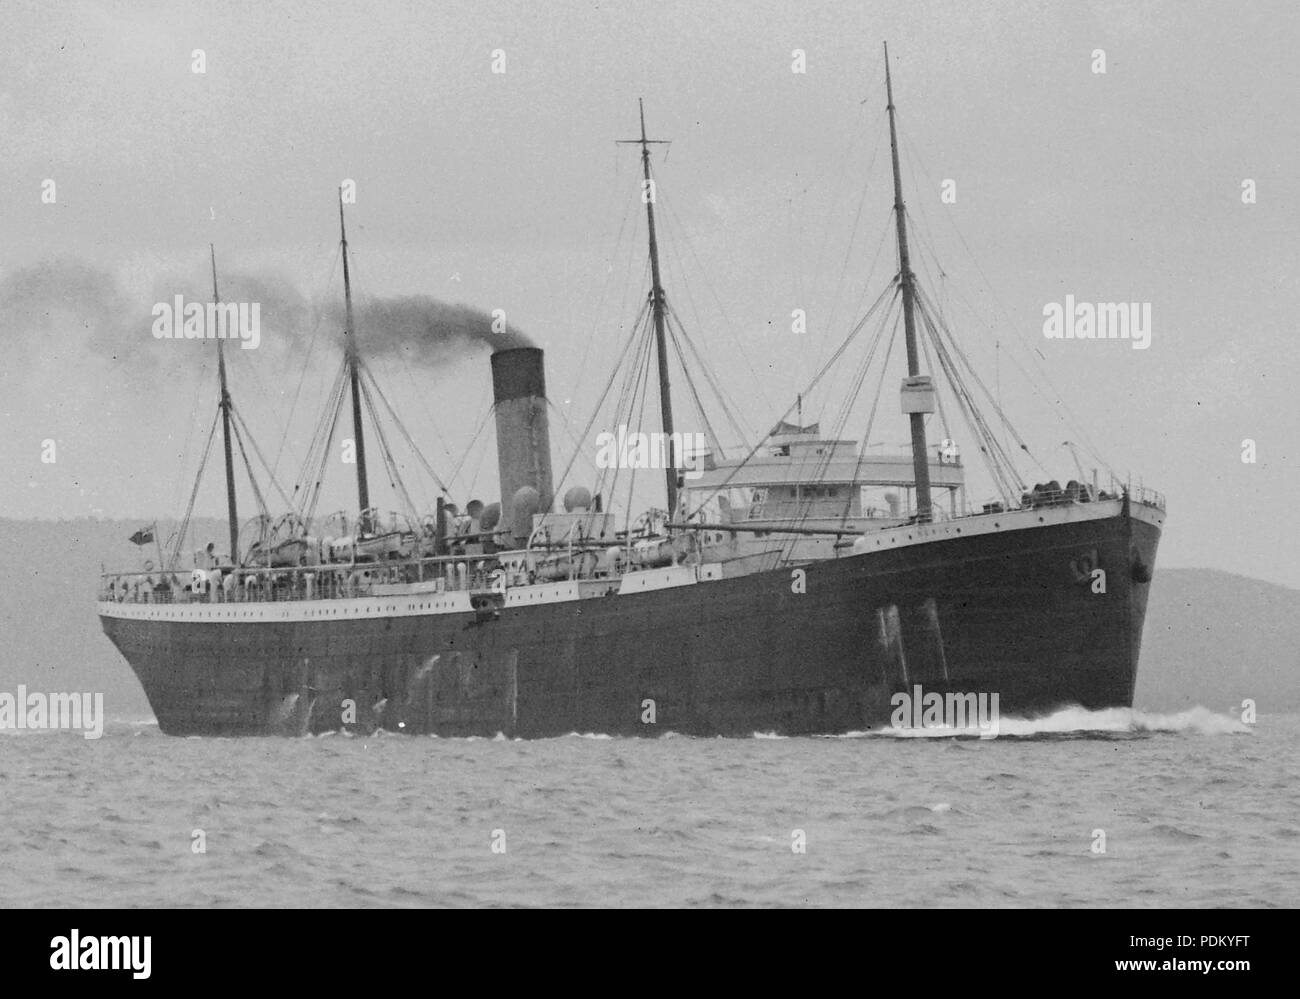 127 Runic (ship, 1900) - SLV H91.250-532 (crop Stock Photo - Alamy